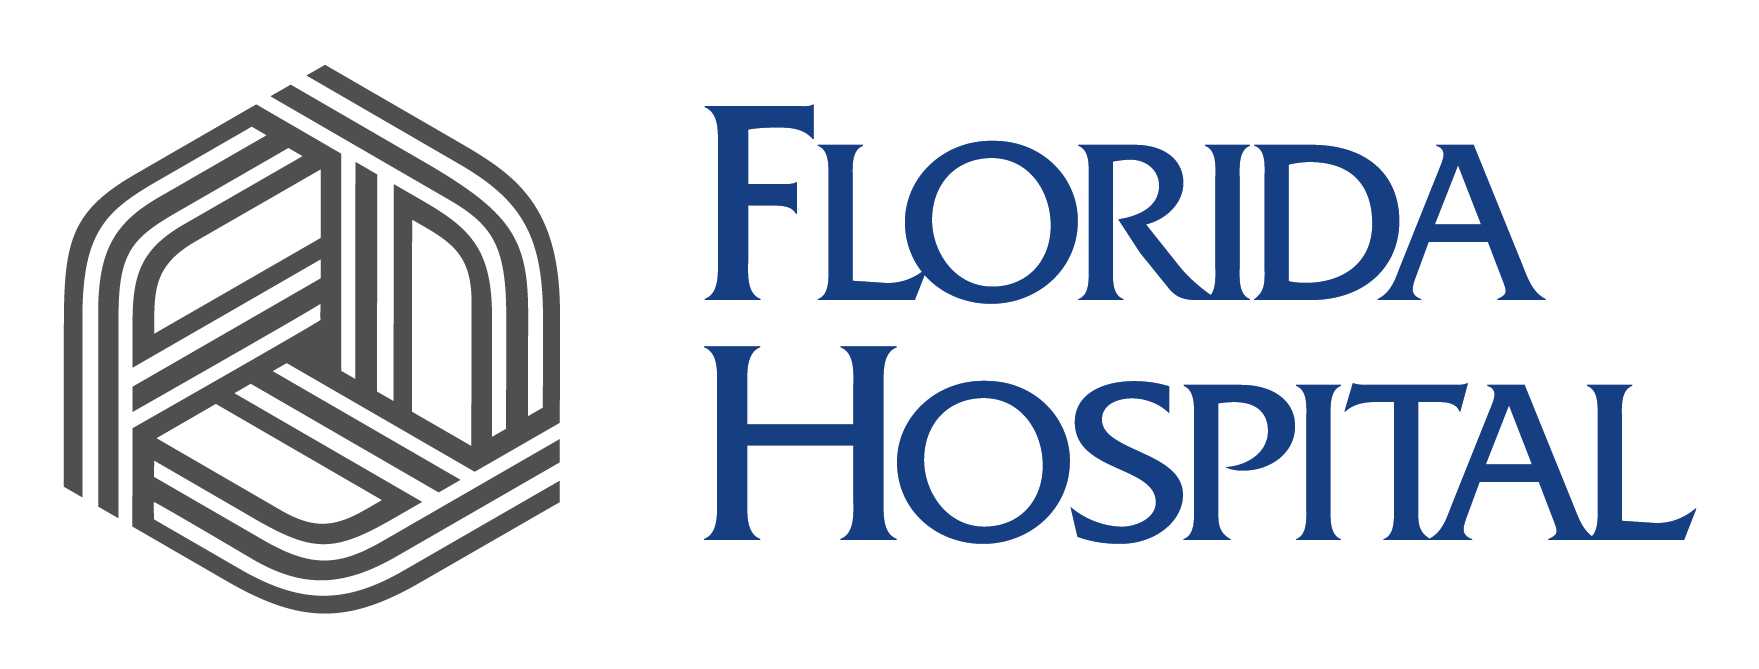 Florida Hospital Logo